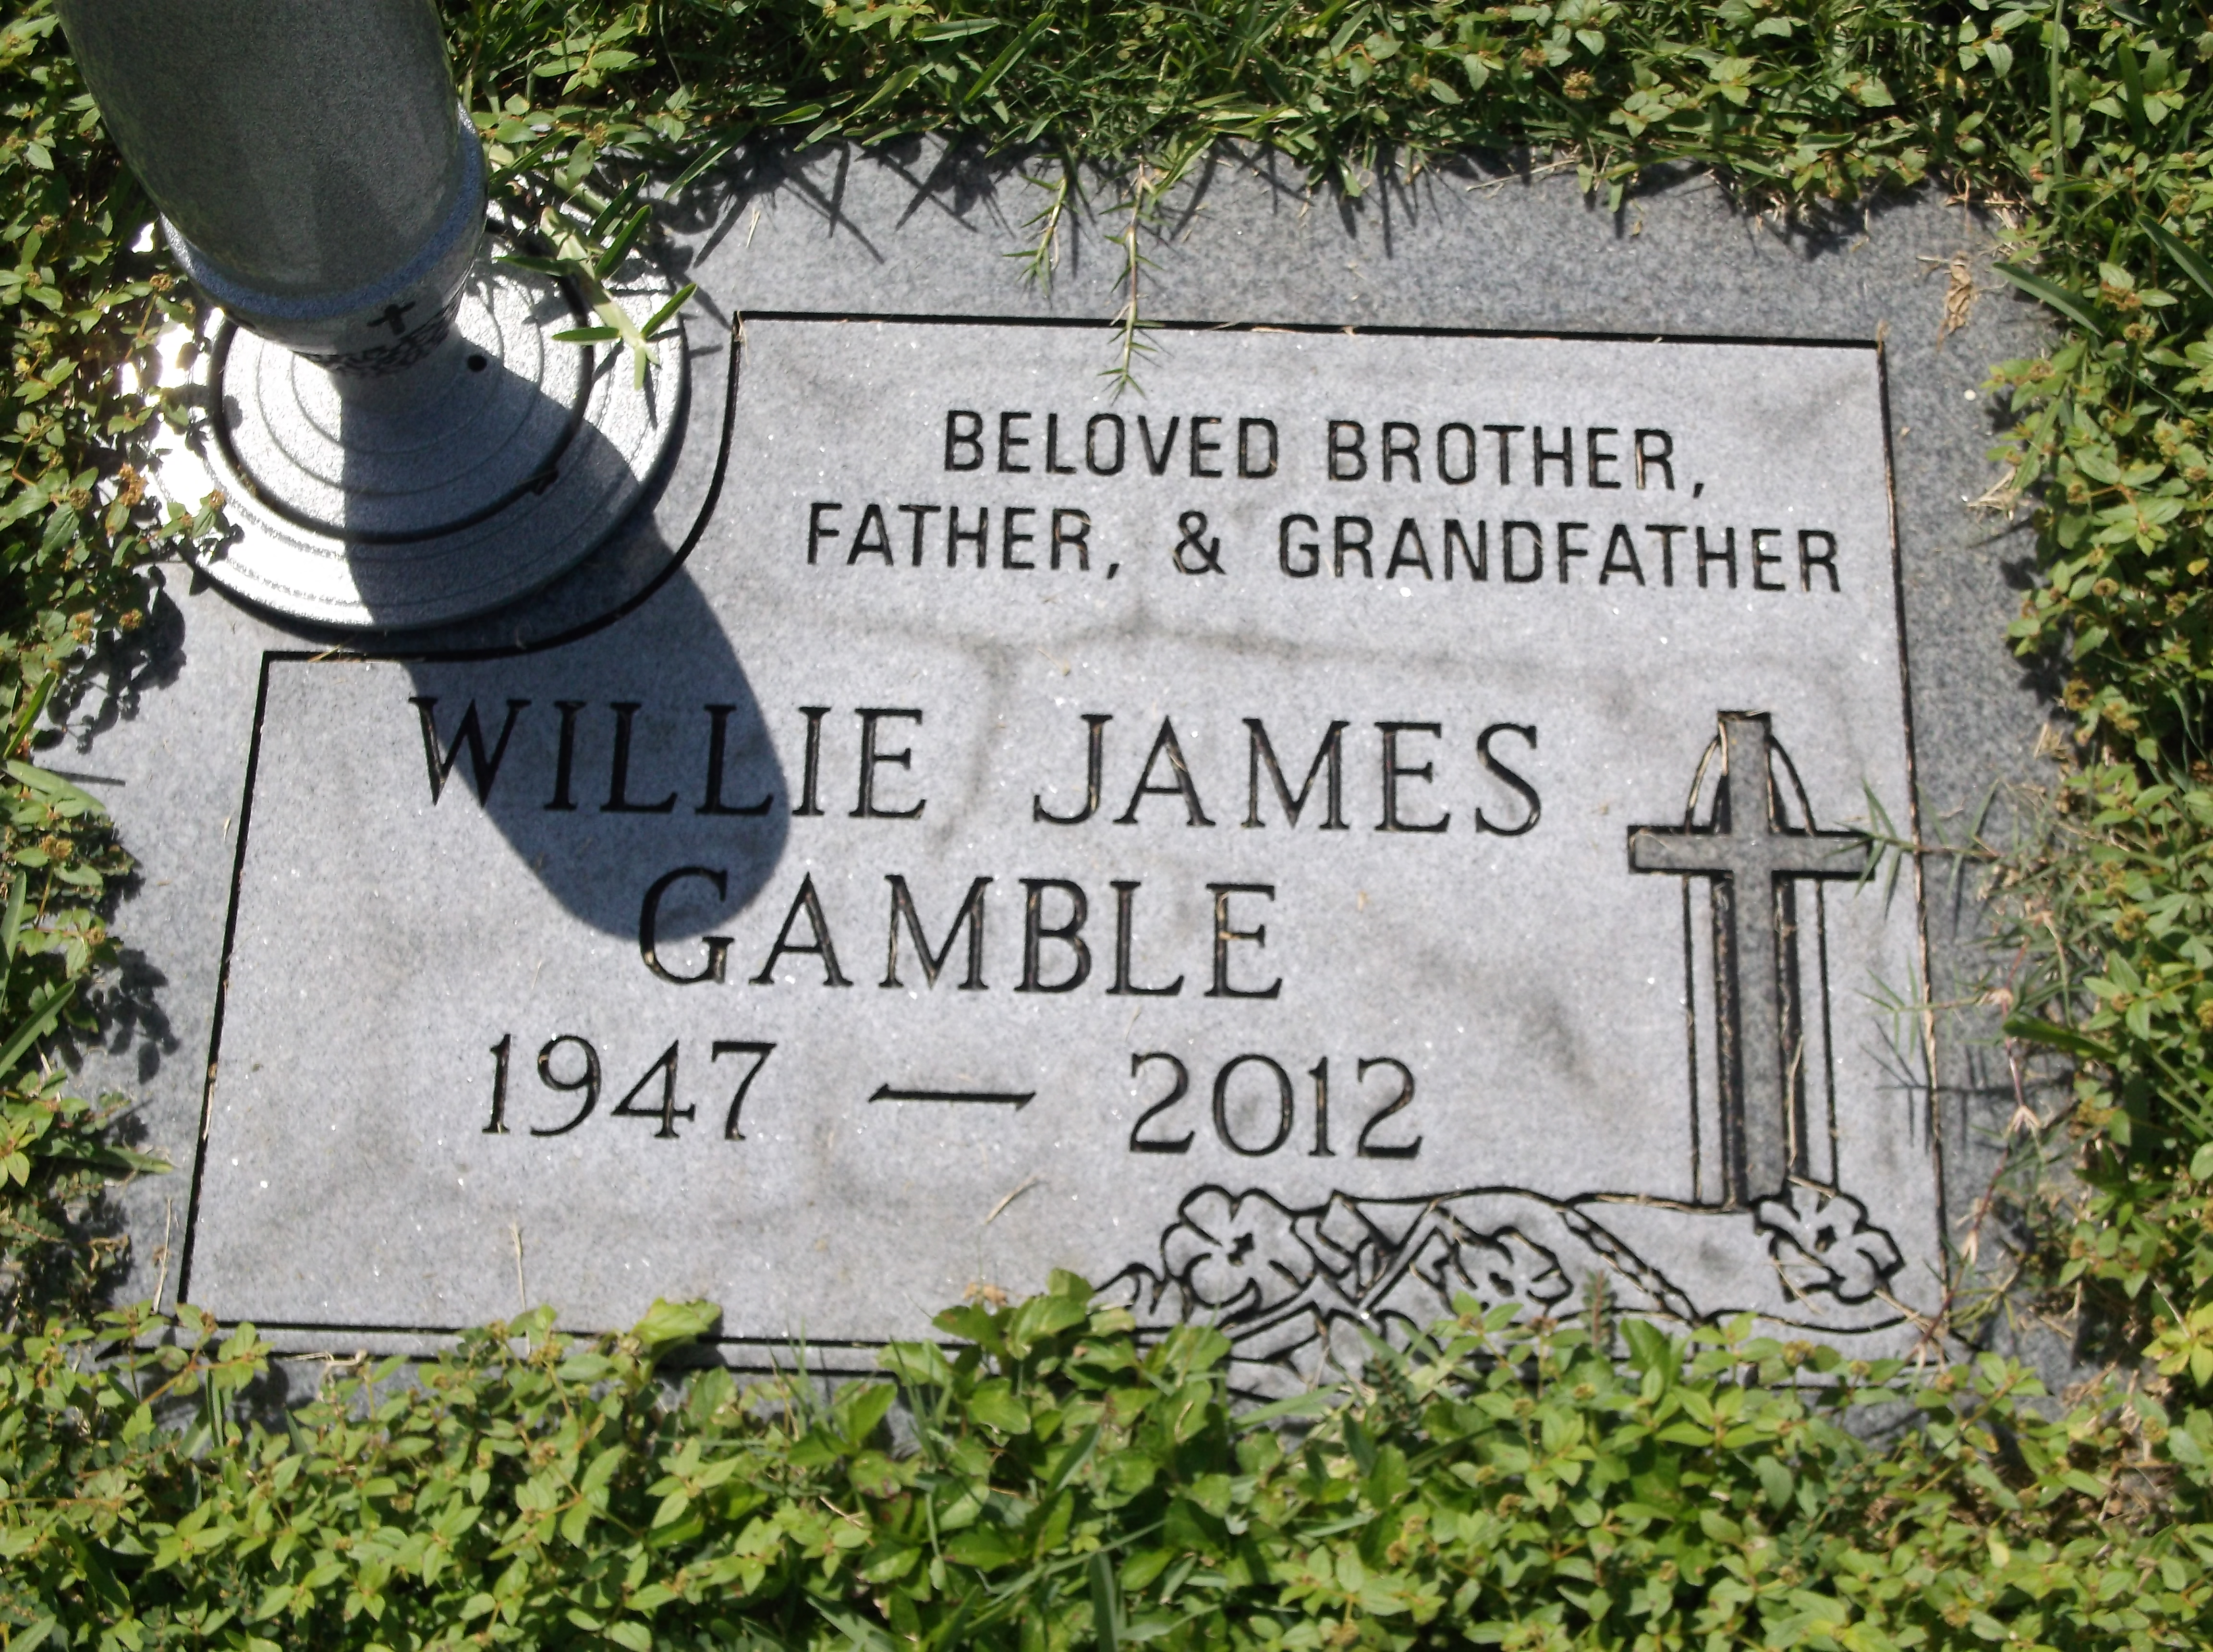 Willie James Gamble